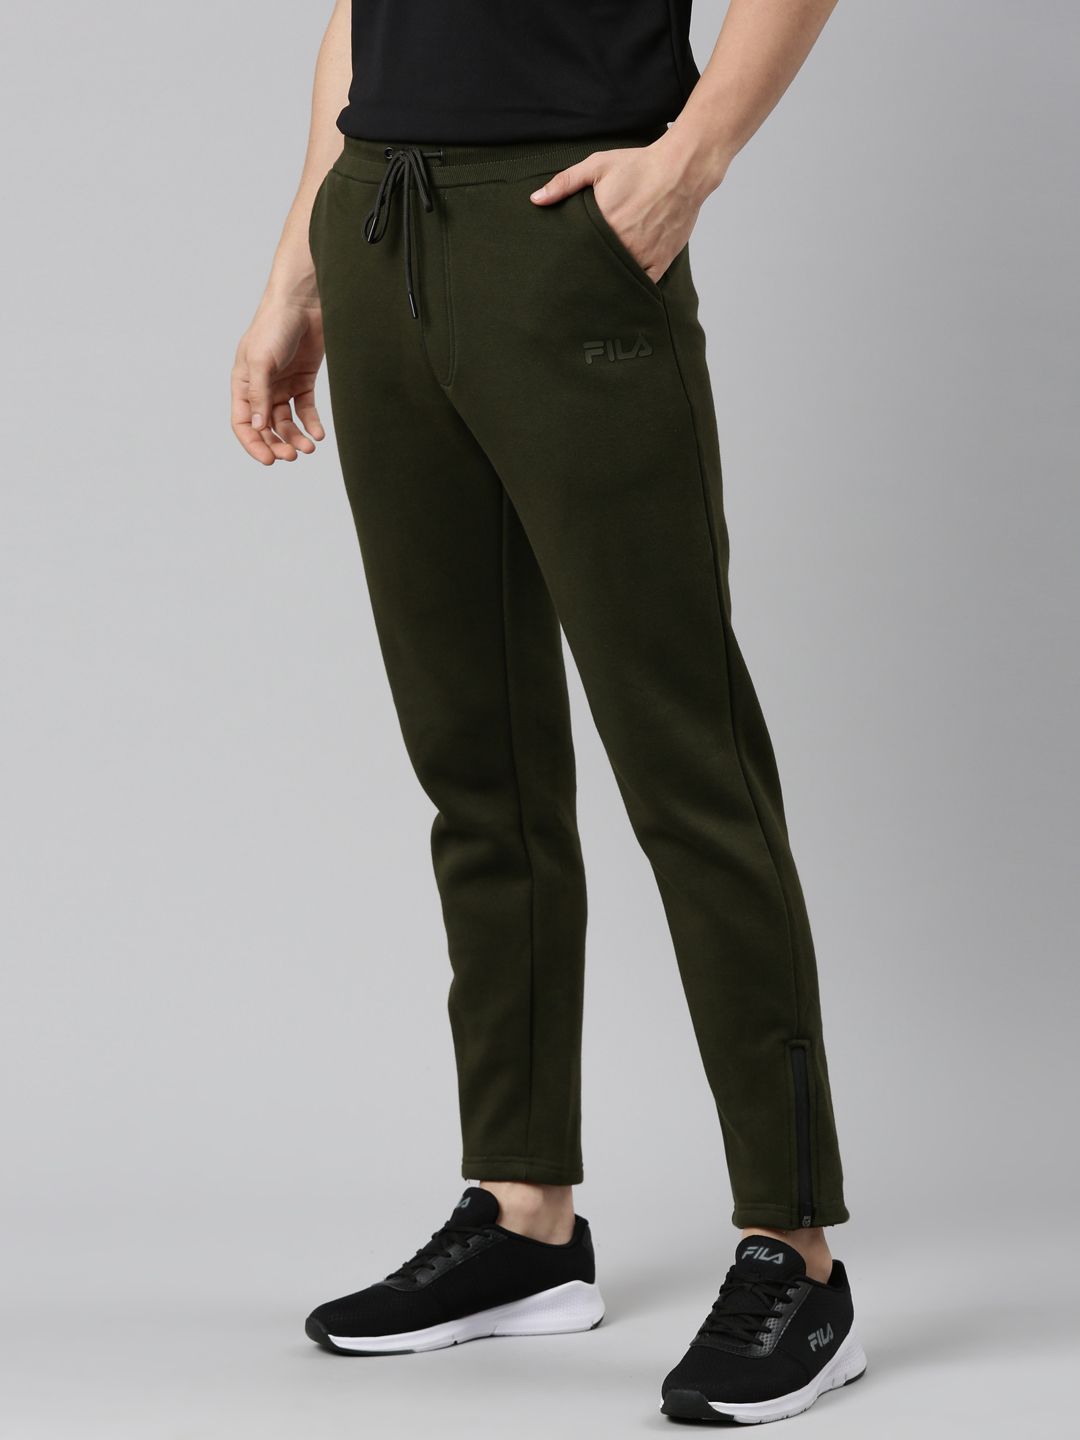 The Chloe Nylon Parachute Pant | Pants for women, Pants, Cargo pants women